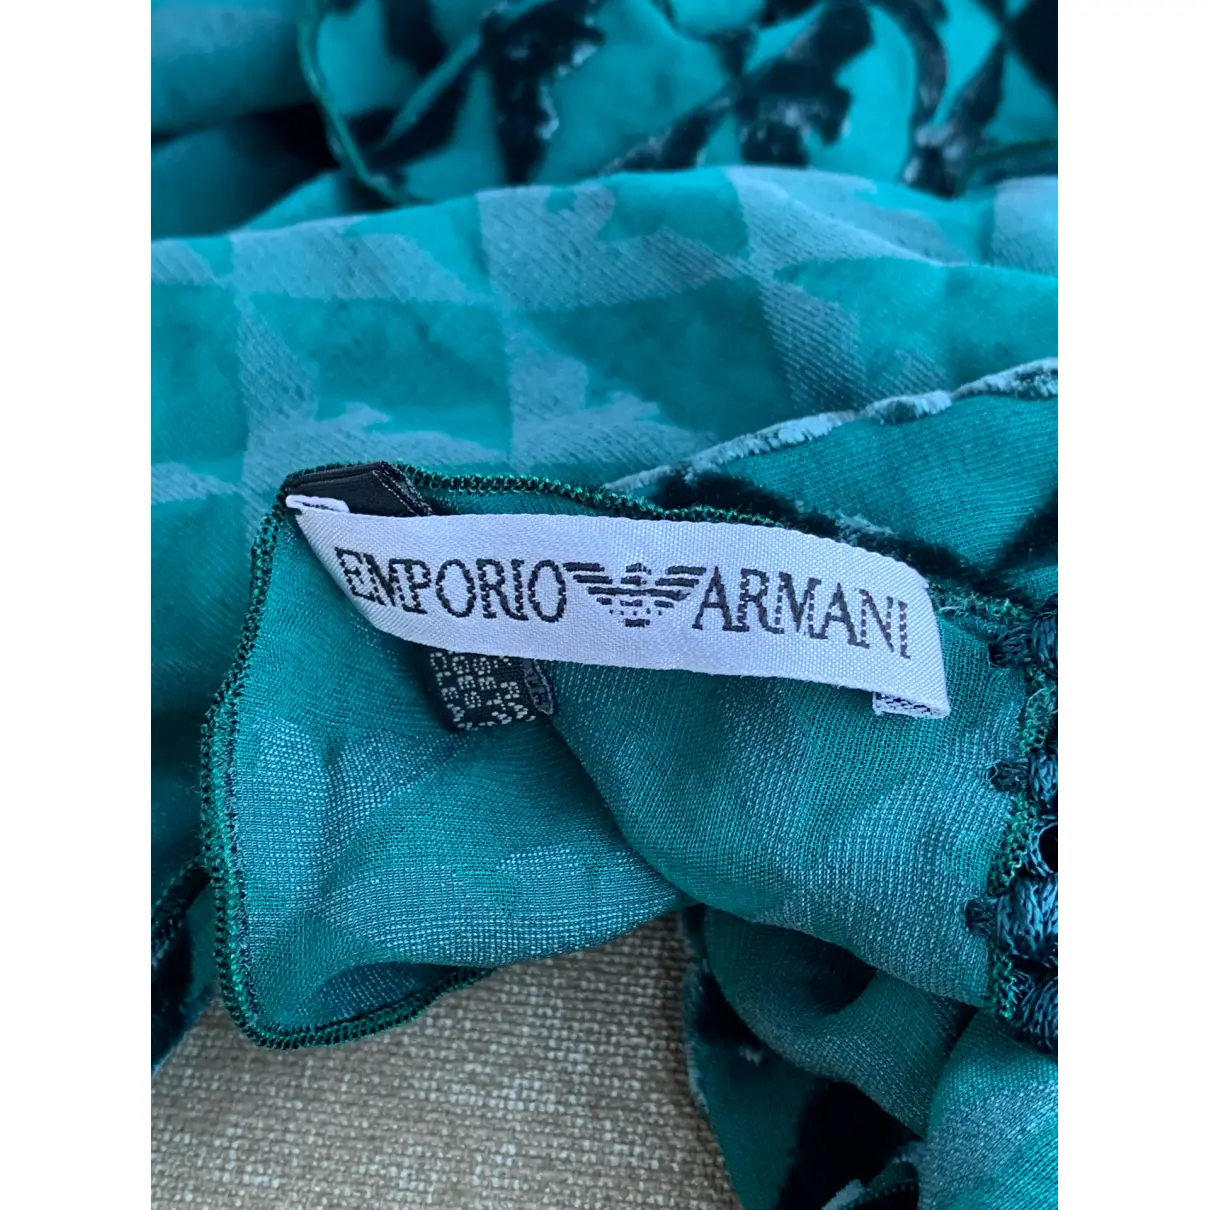 Luxury Emporio Armani Scarves & pocket squares Men